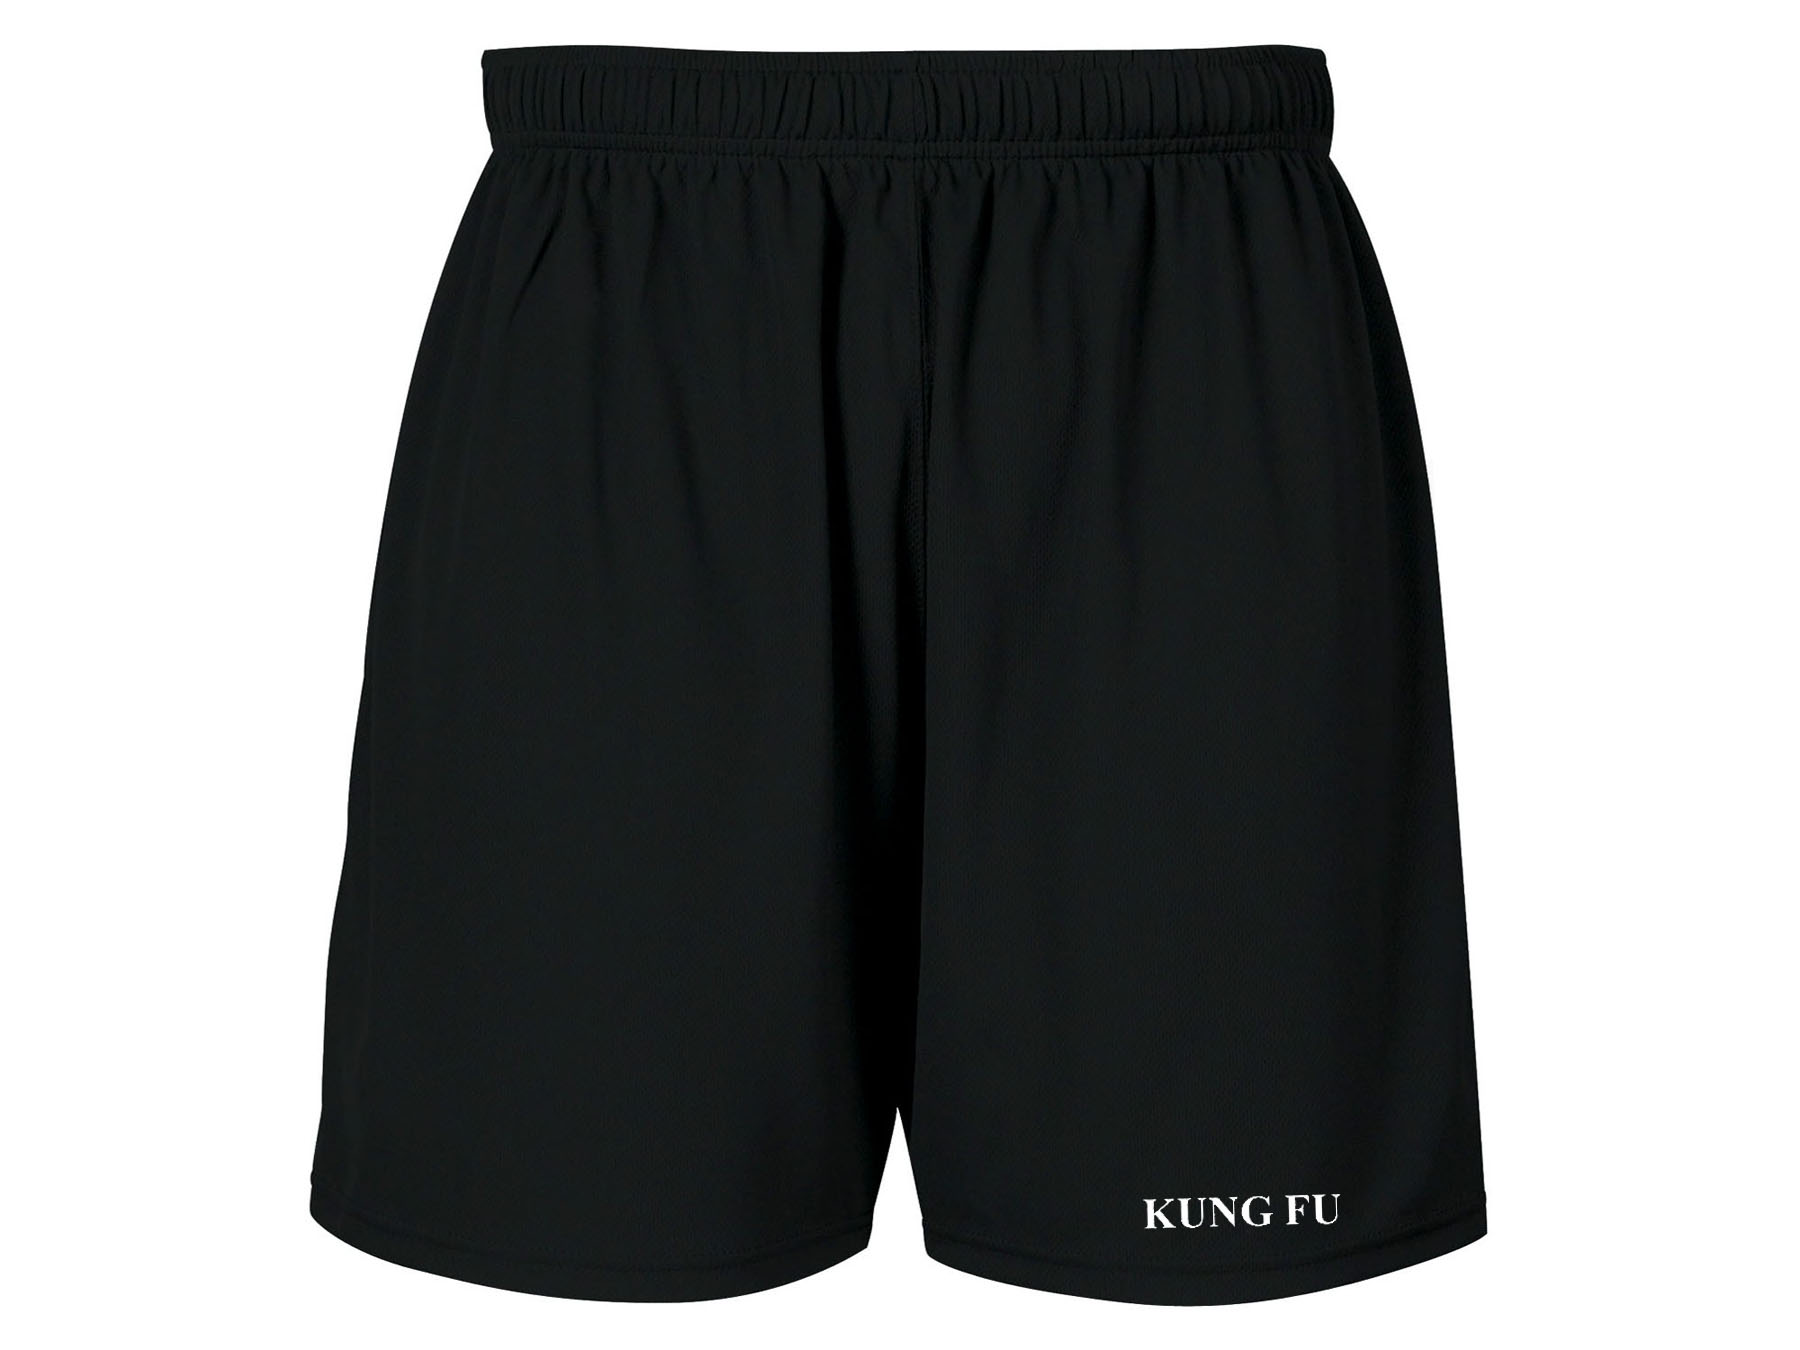 Kung fu moisture wicking fabric black workout shorts